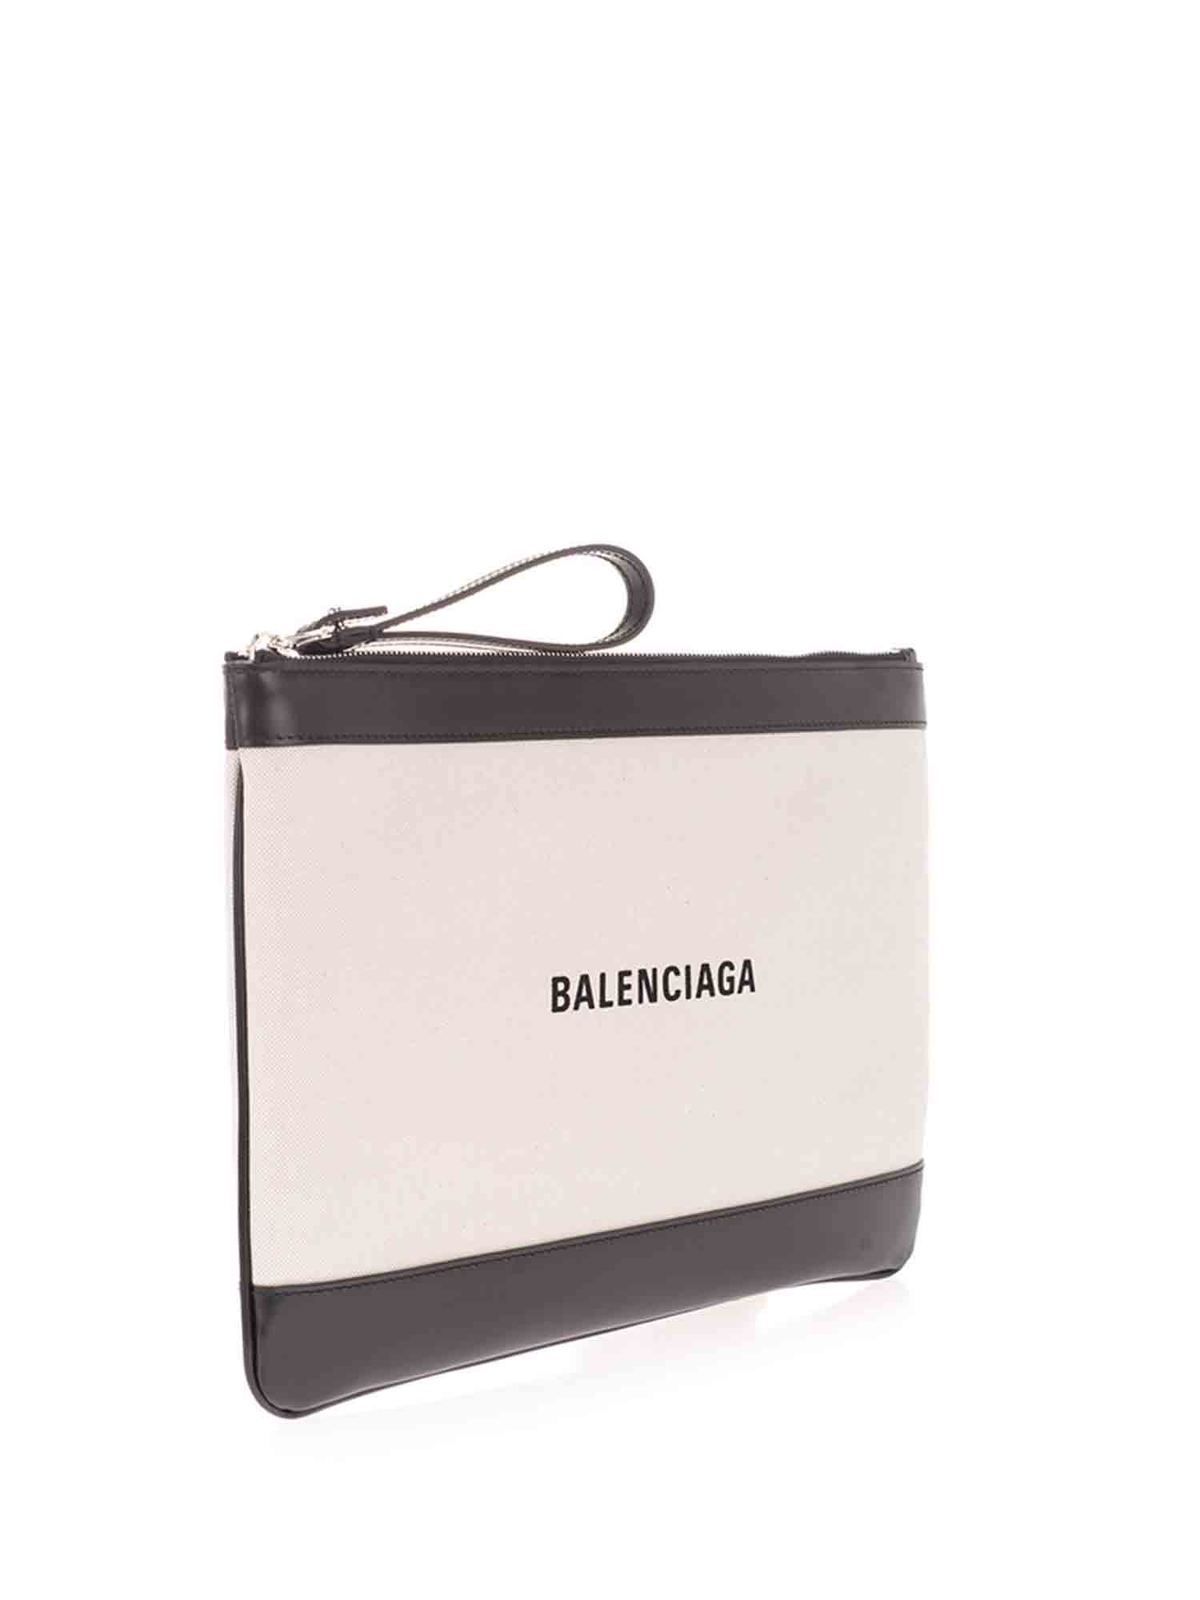 Clutches Balenciaga - Canvas clutch in natural color - 6387442HH2N9260